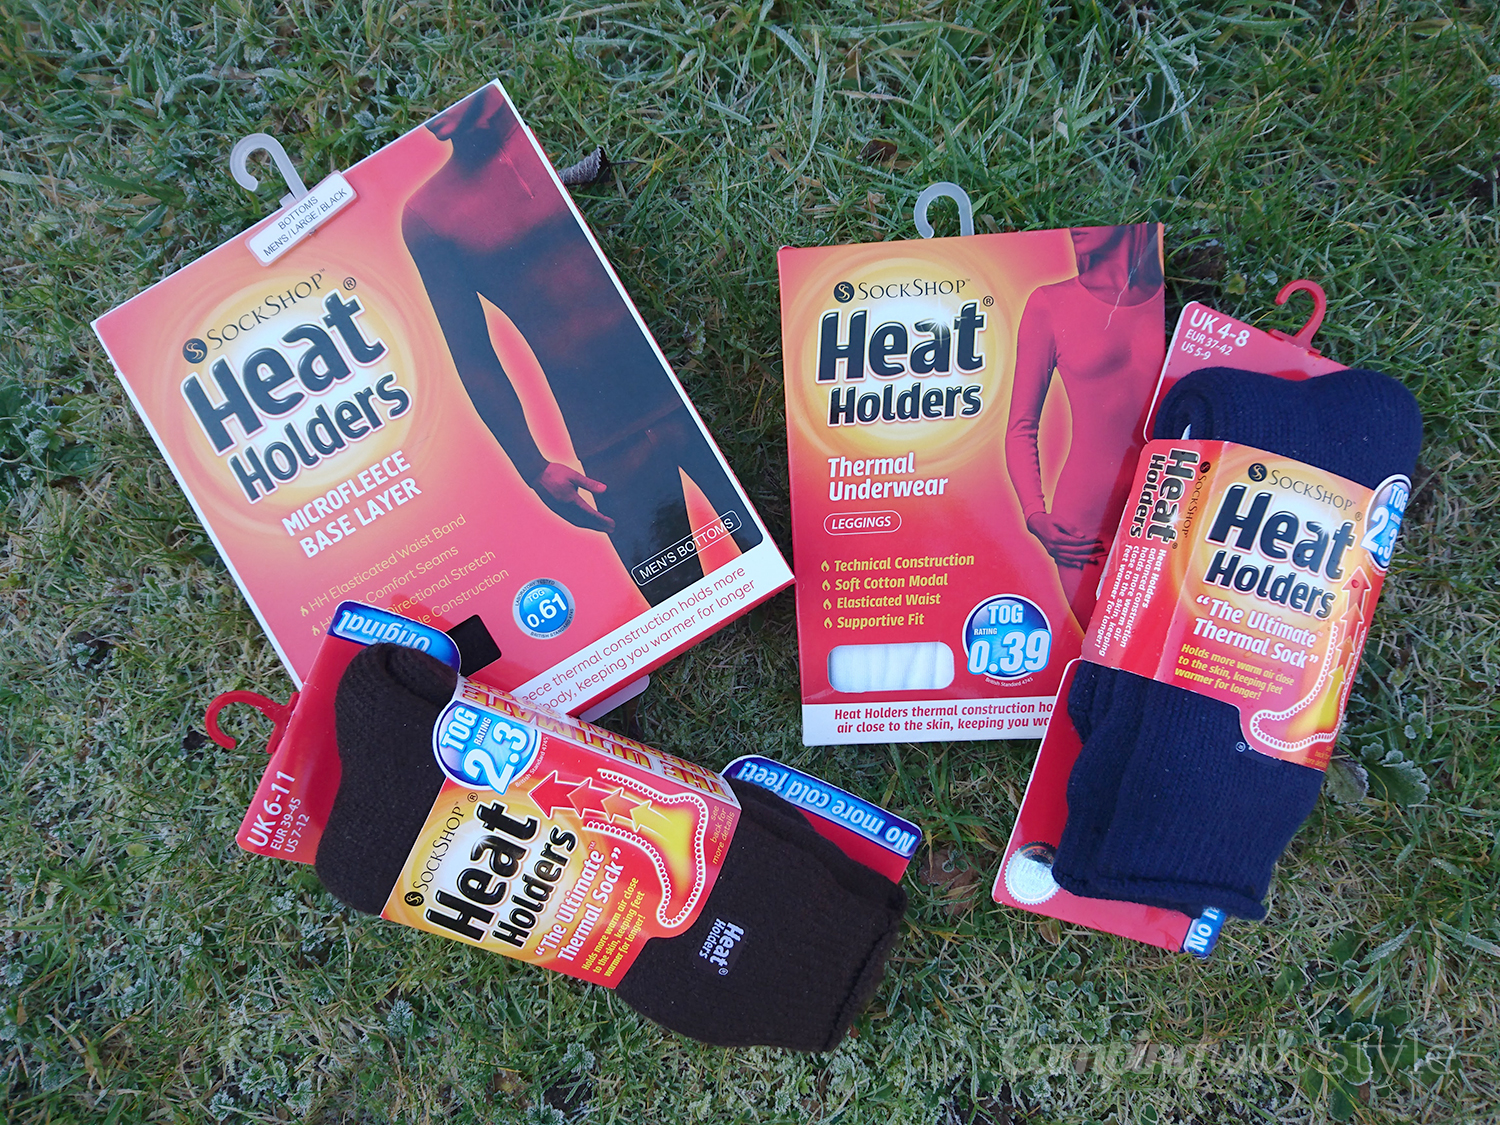 Octave Ladies Heat Holders 0.39 TOG Rating Thermal Leggings in 3 Colors